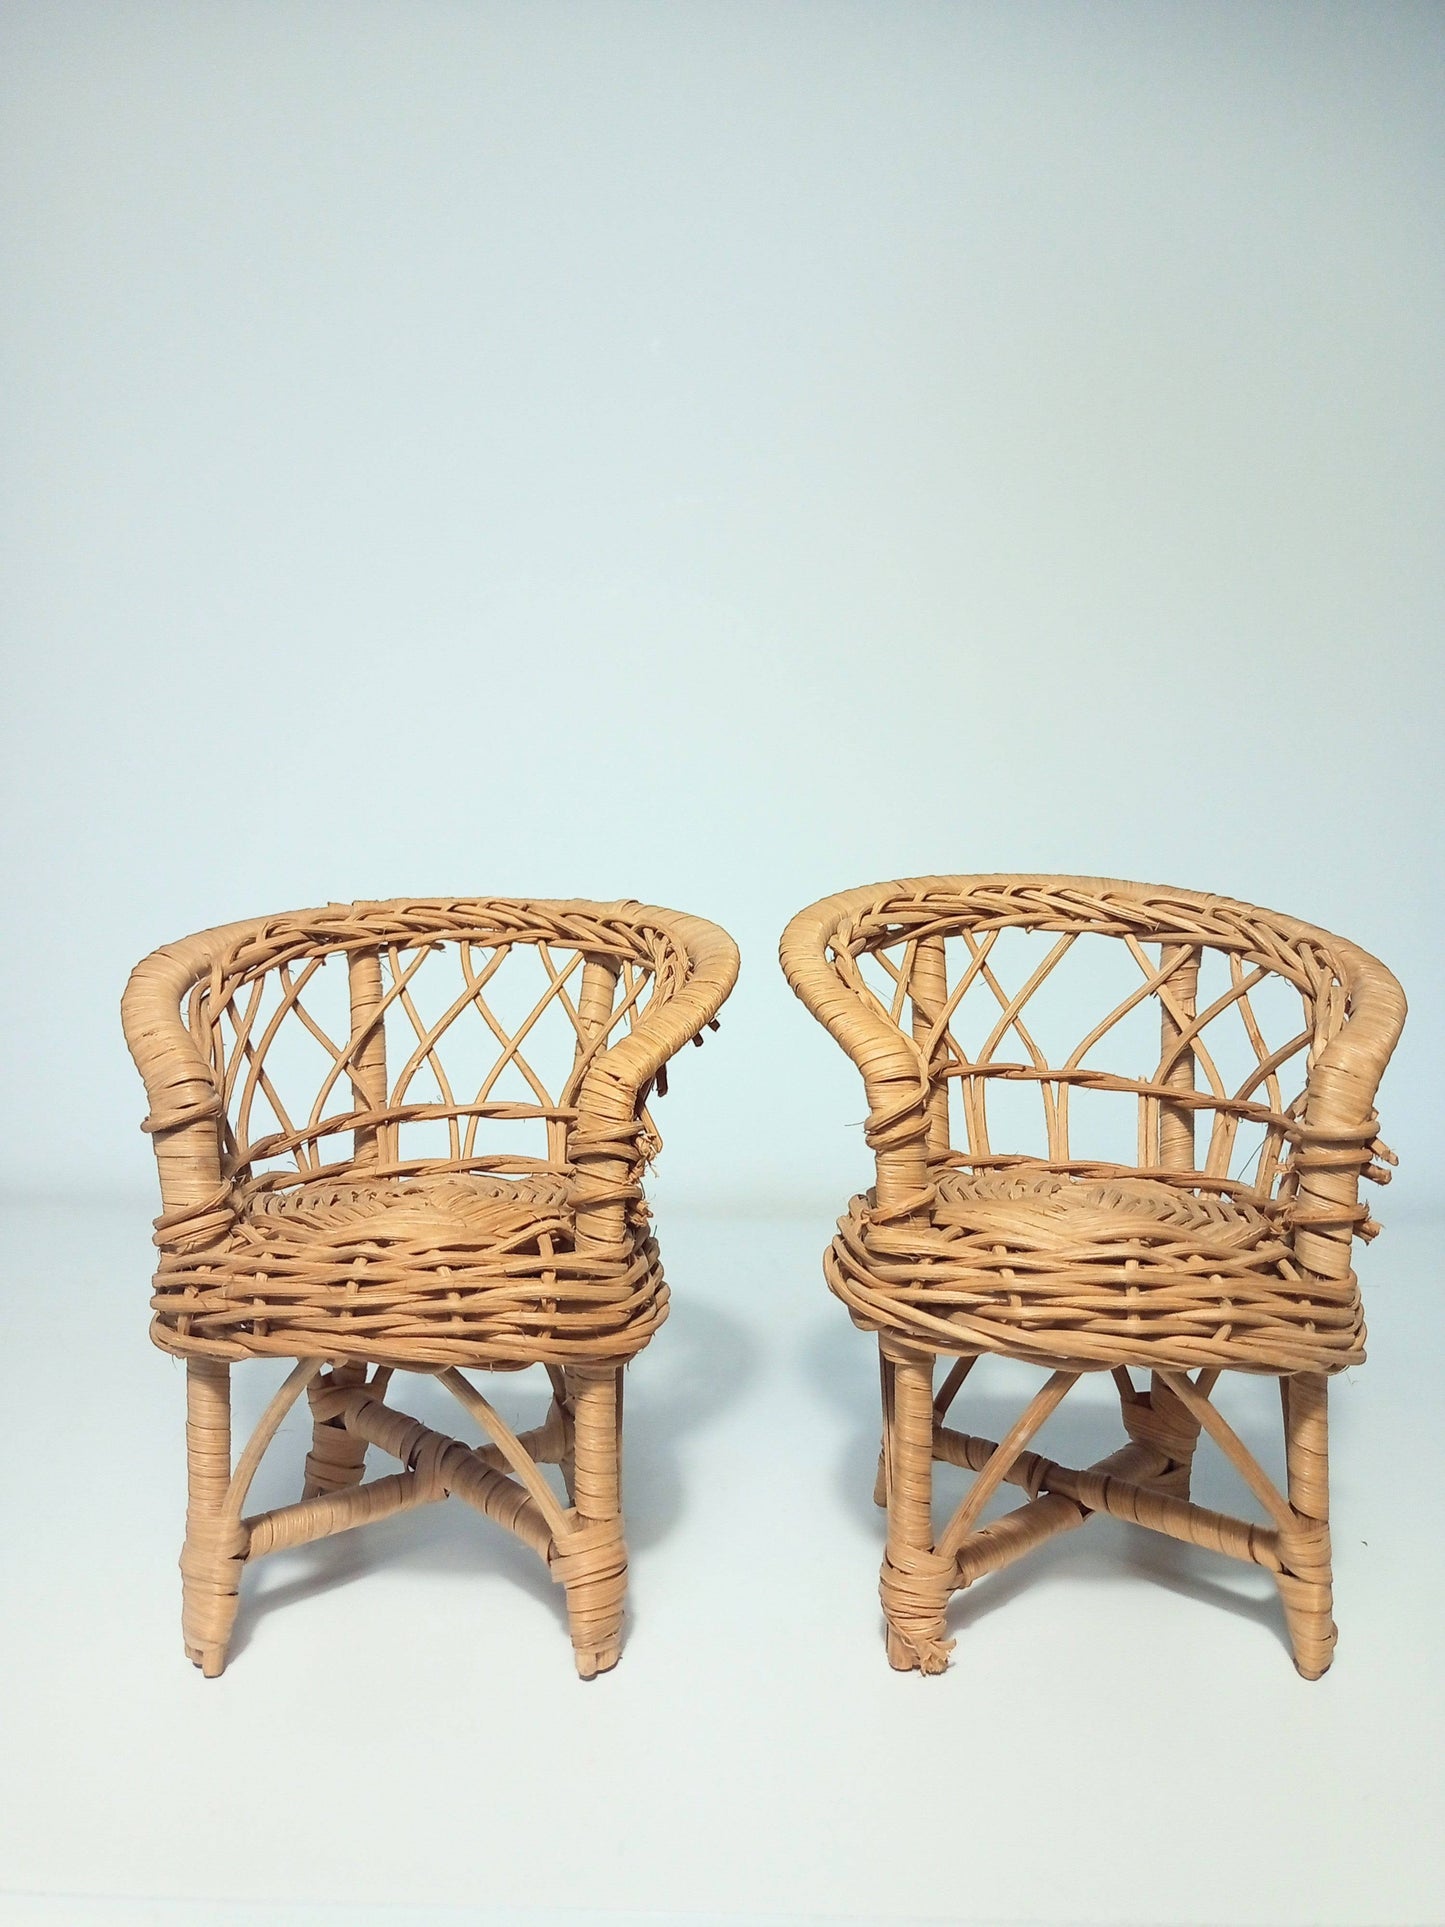 Trio de fauteuils miniatures en osier - cetaitmieuxavant